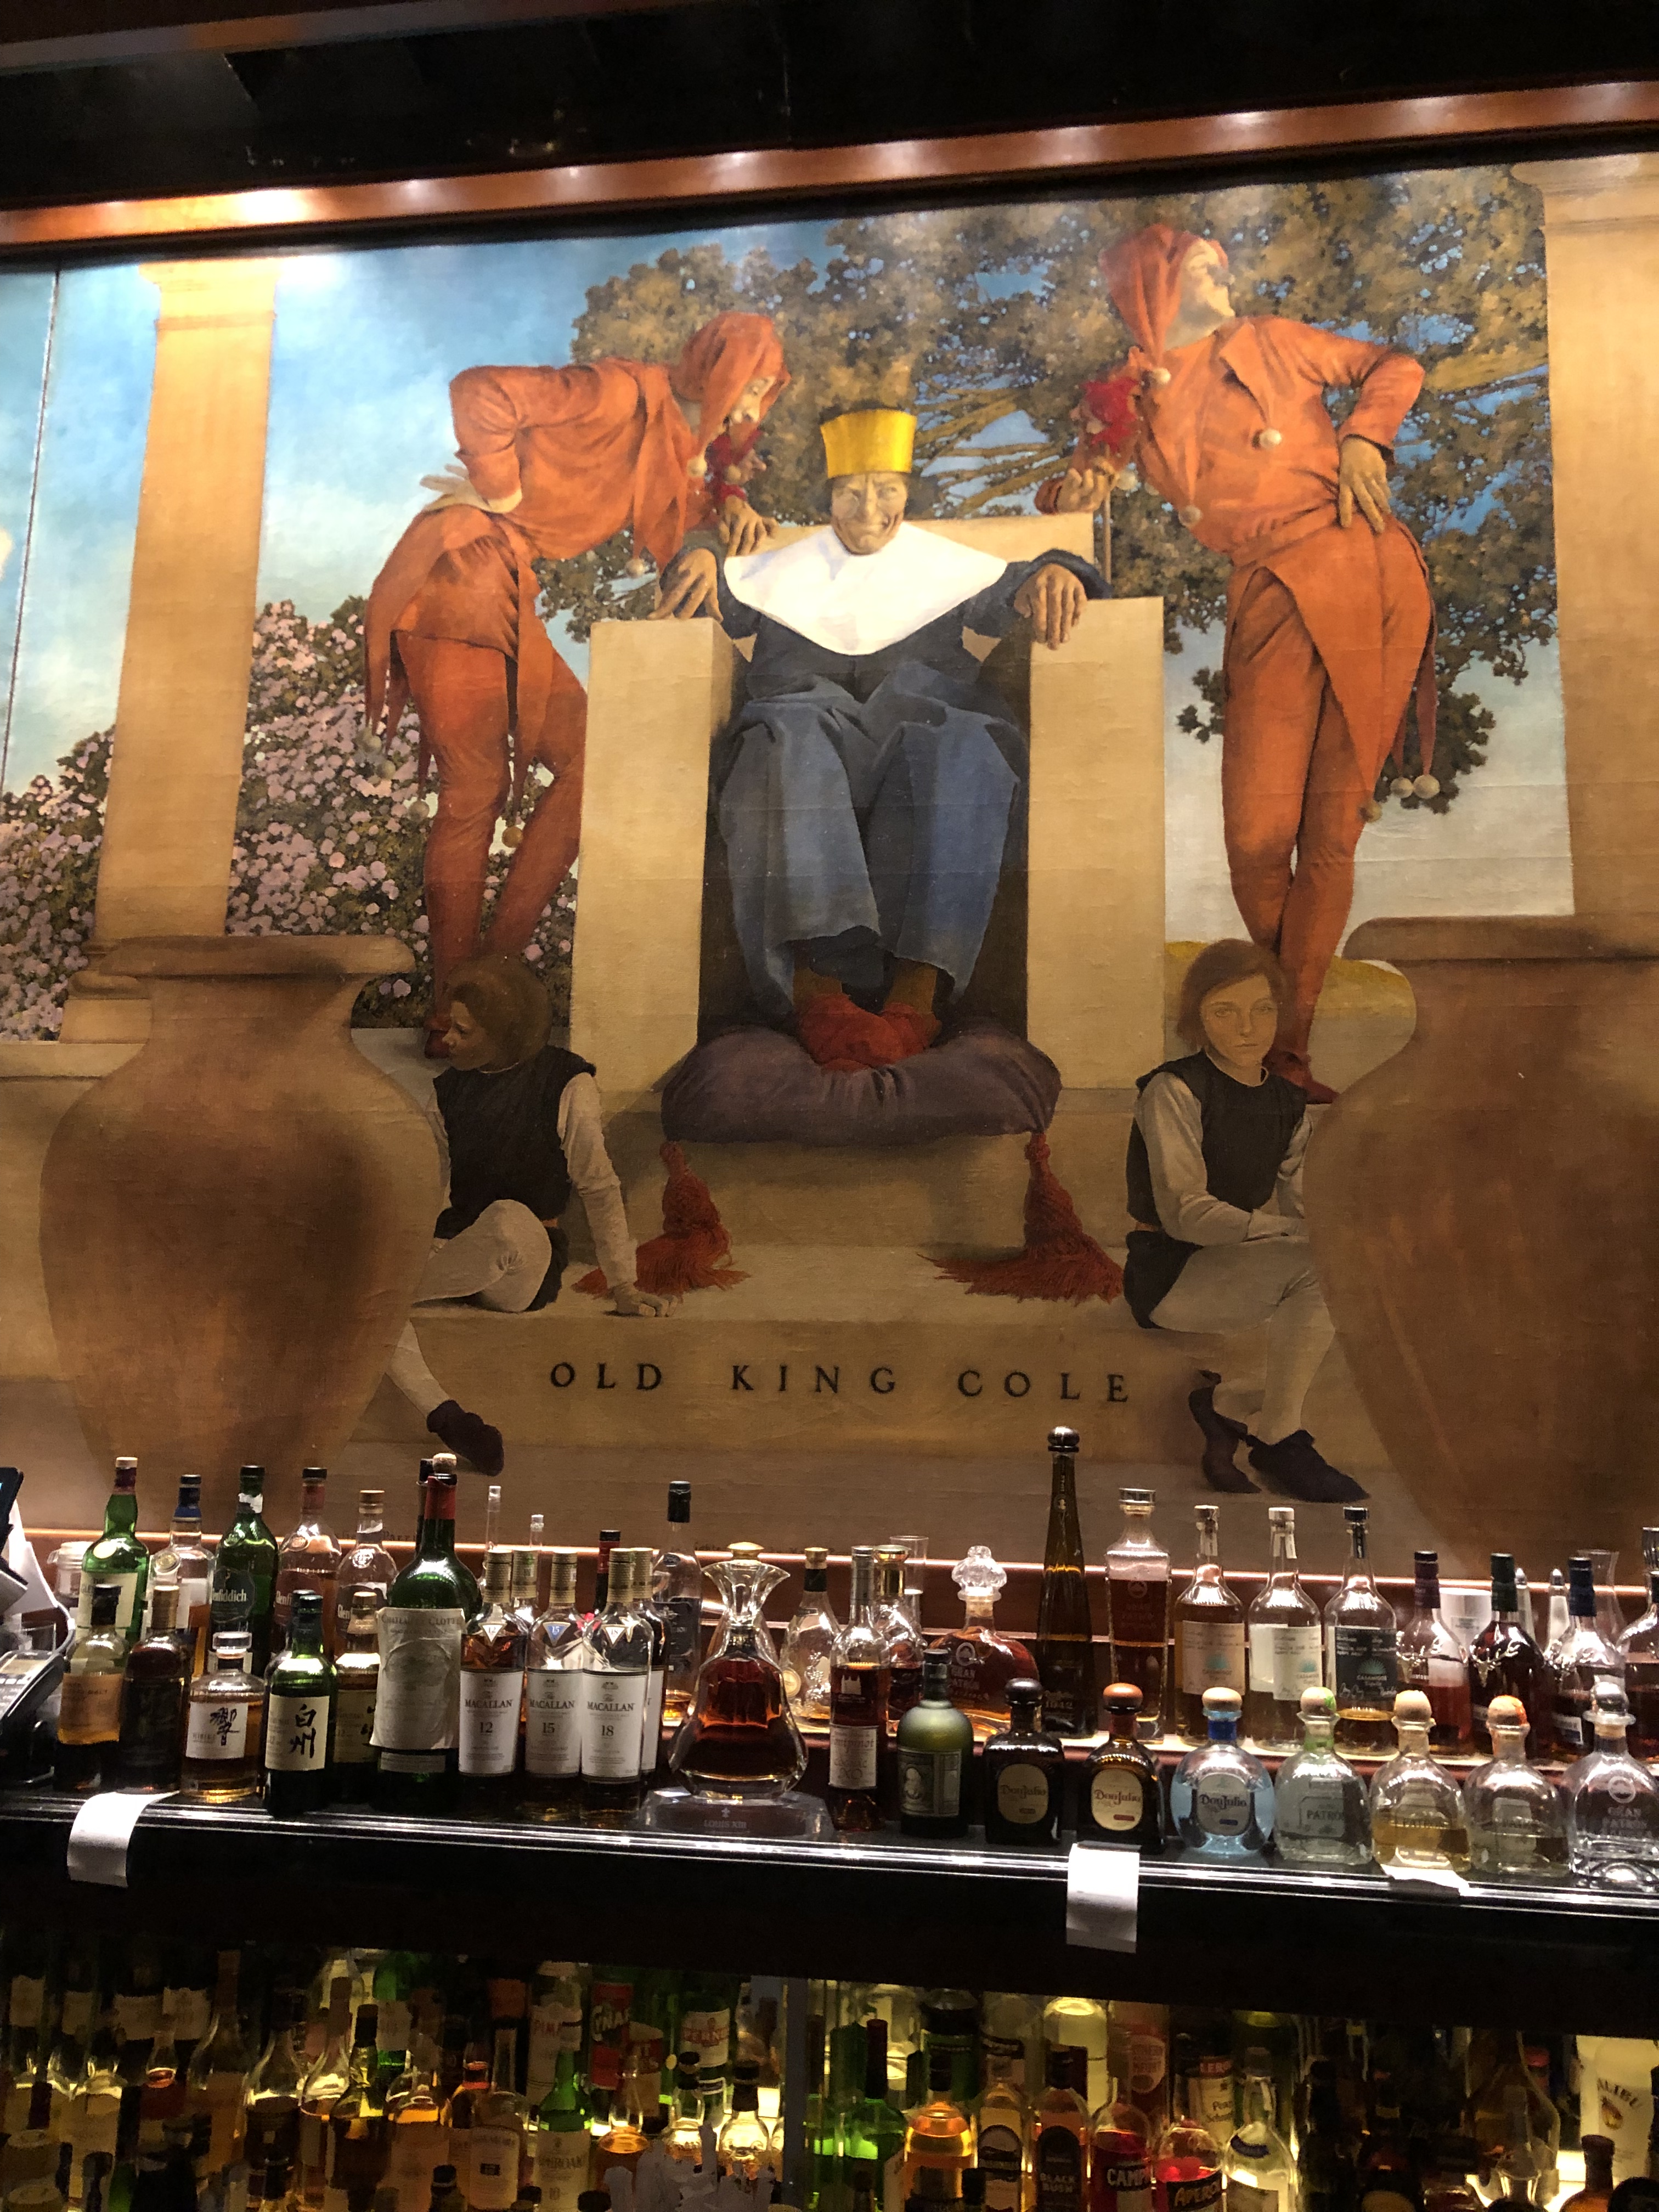 King Cole Bar at St. Regis New York